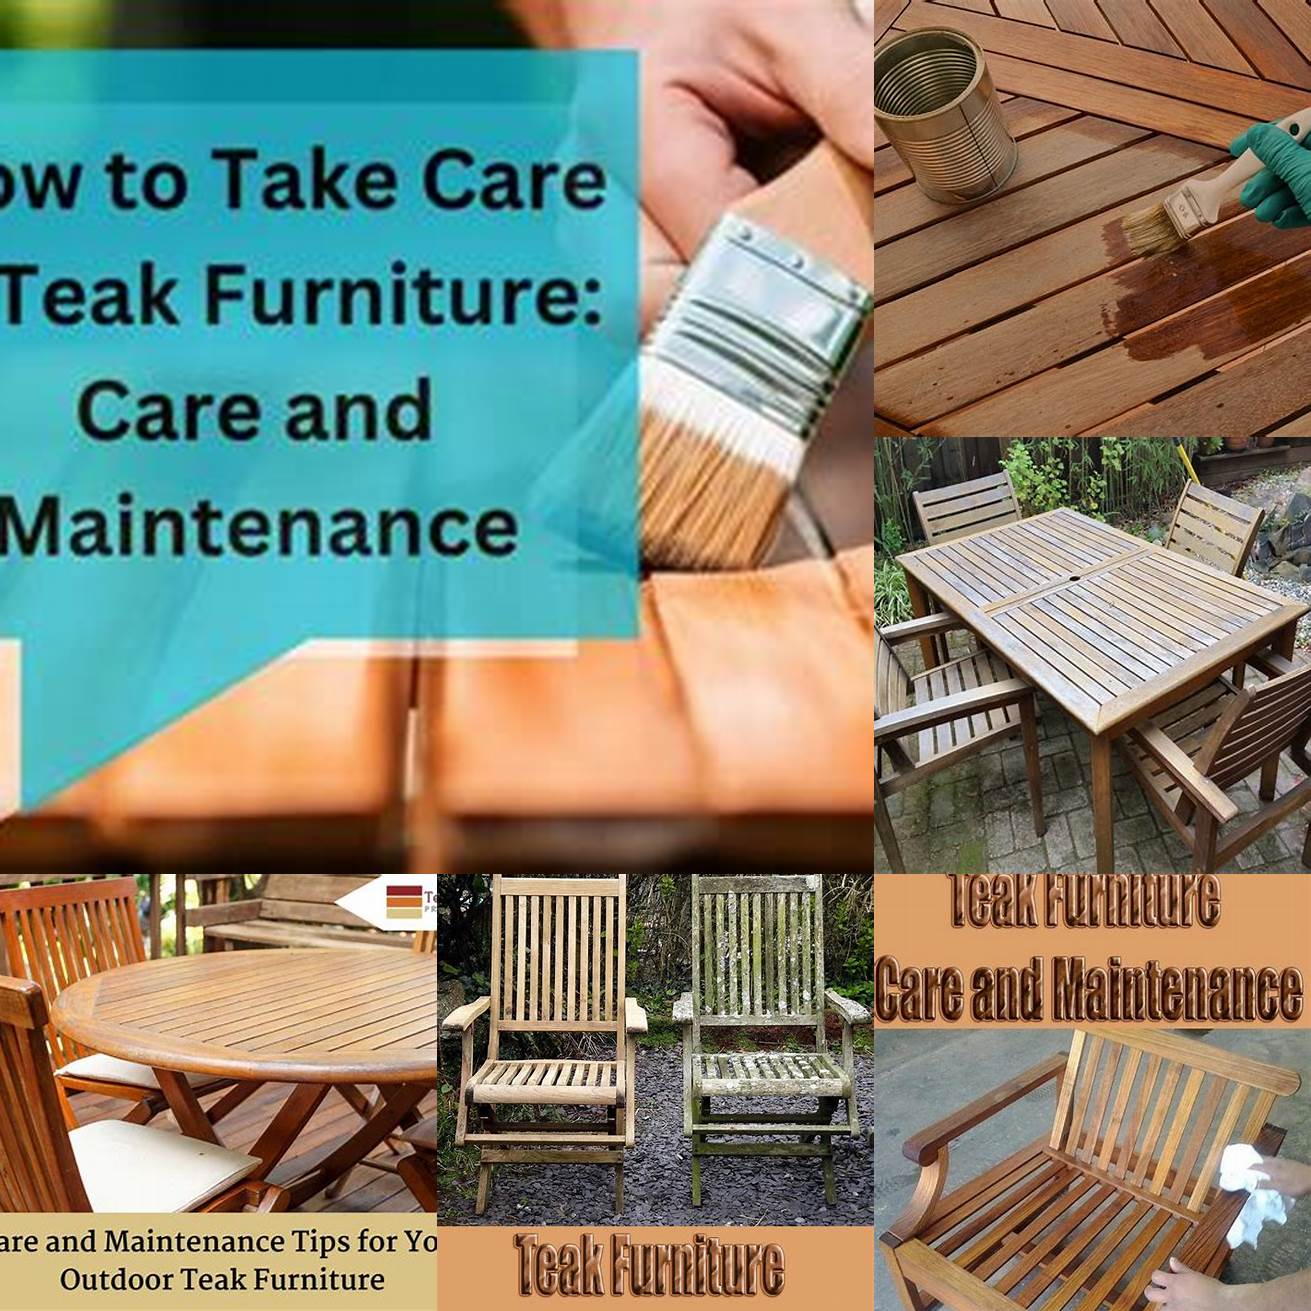 Teak furniture care